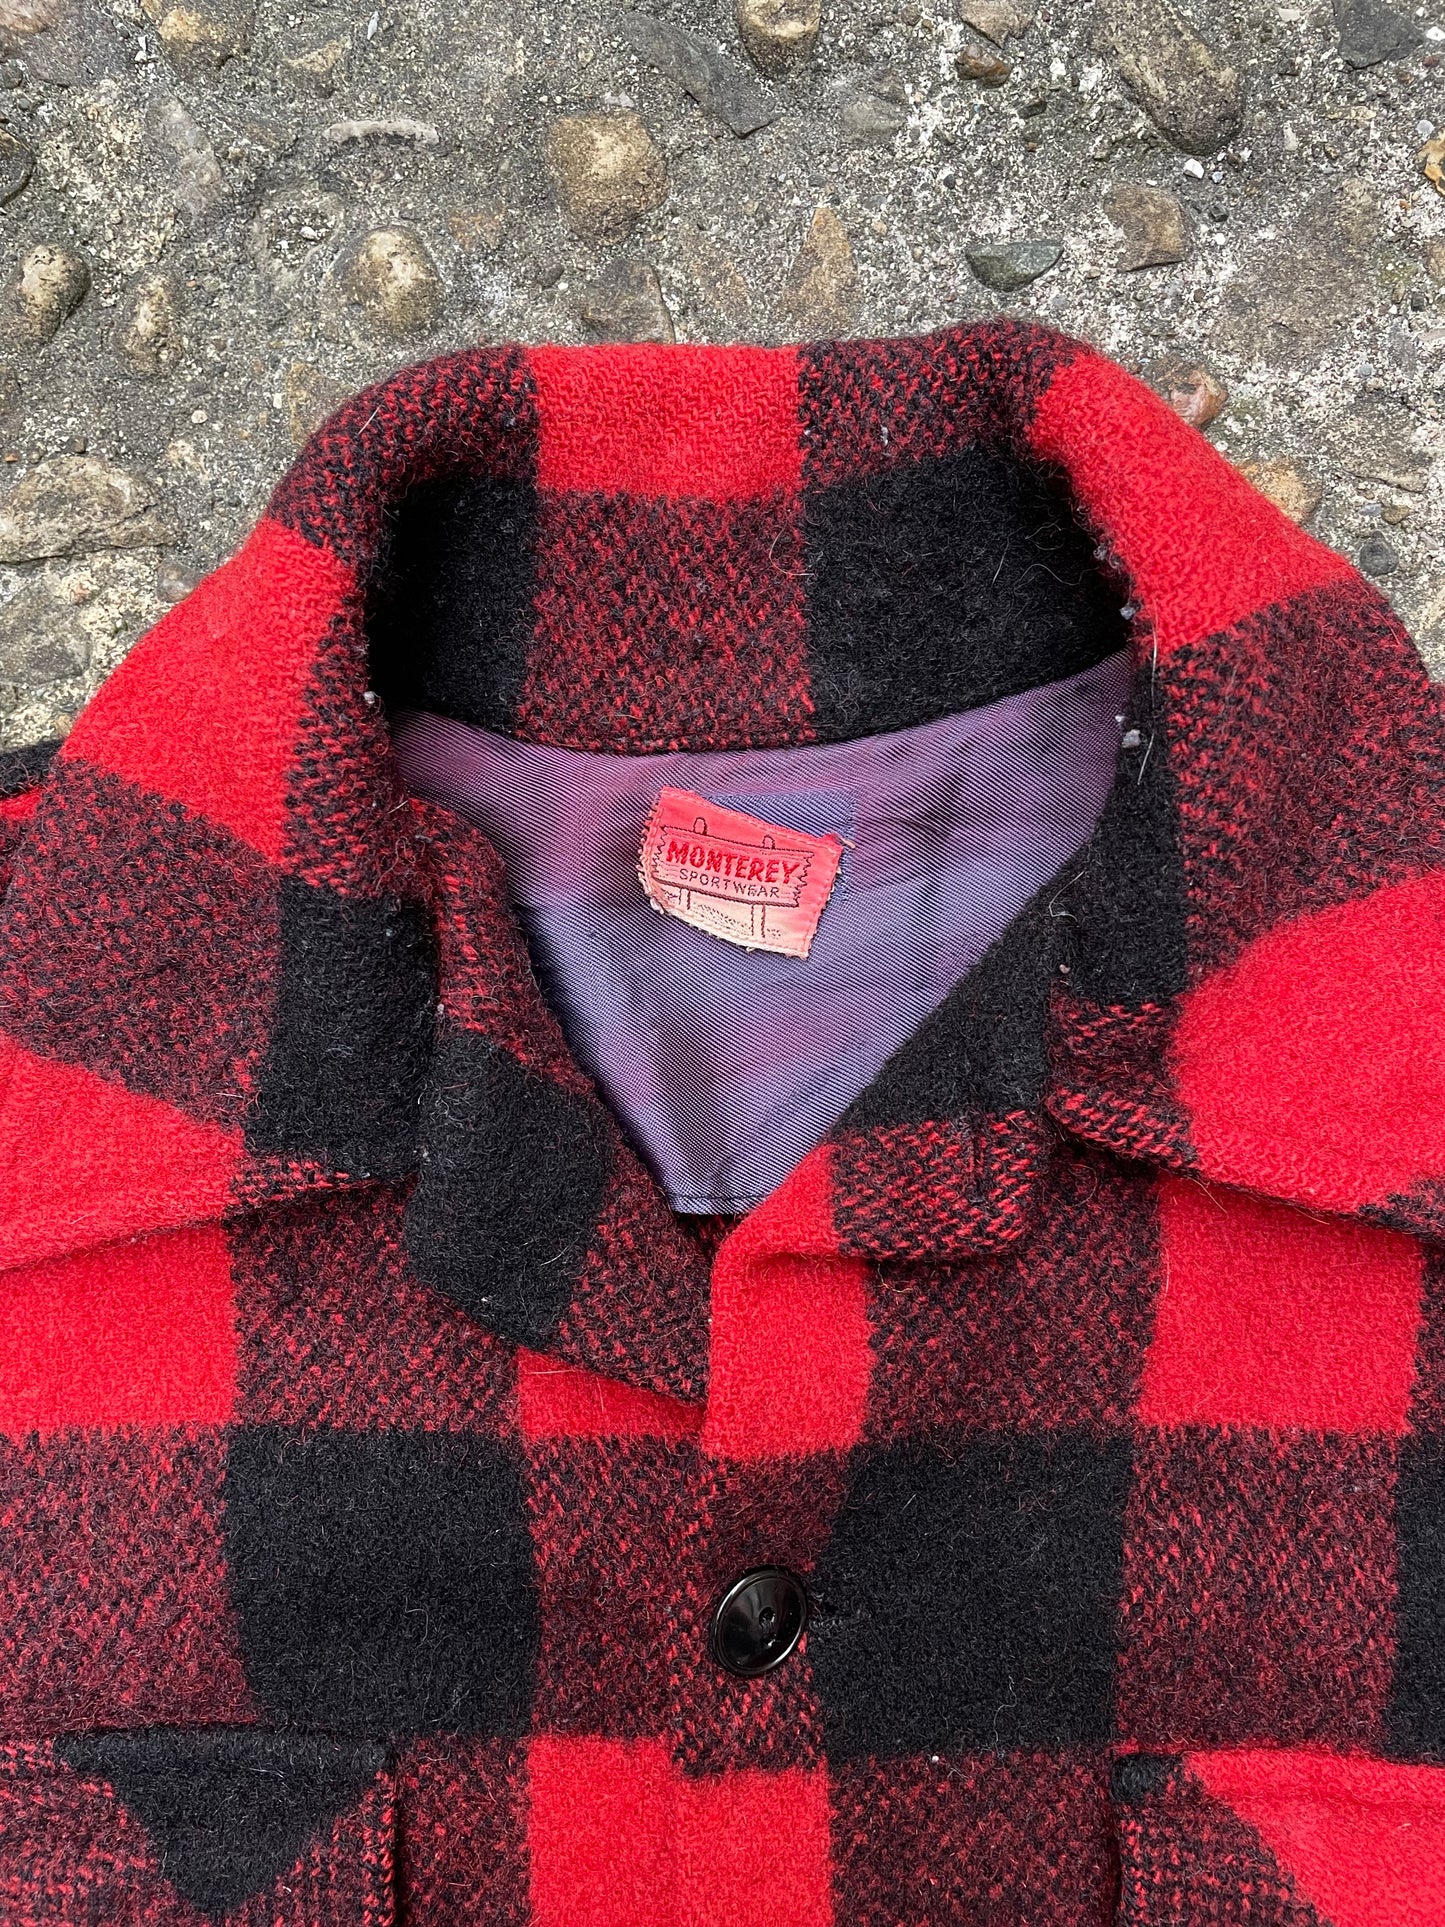 1950’s/1960’s Monterey Sportswear Buffalo Check Plaid Wool Jacket - S